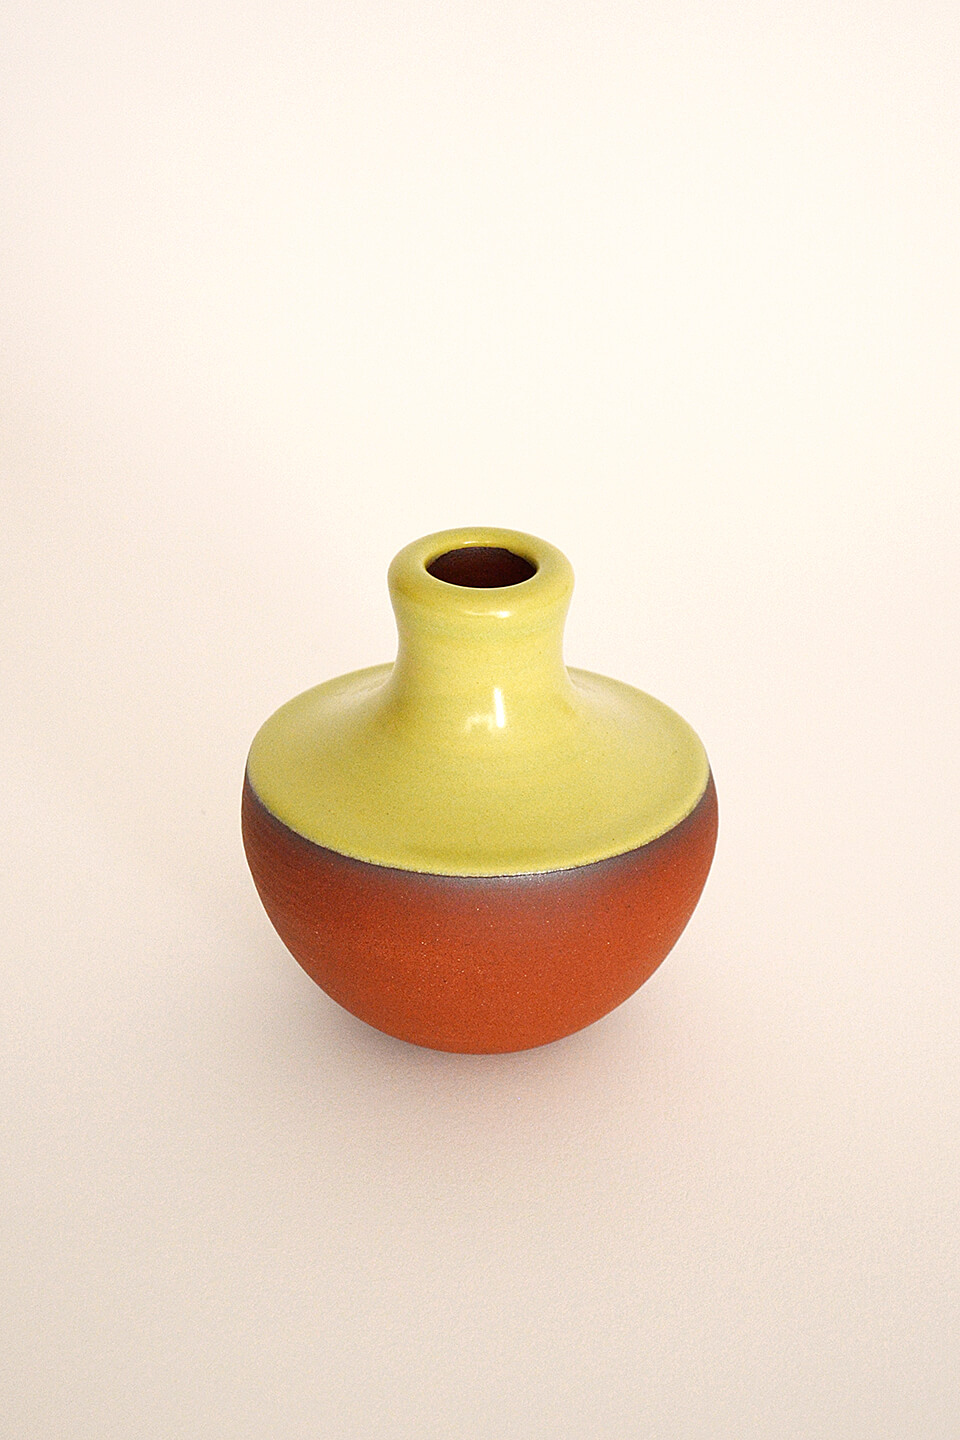 Satin Yellow Green Ceramic Vase No. 639